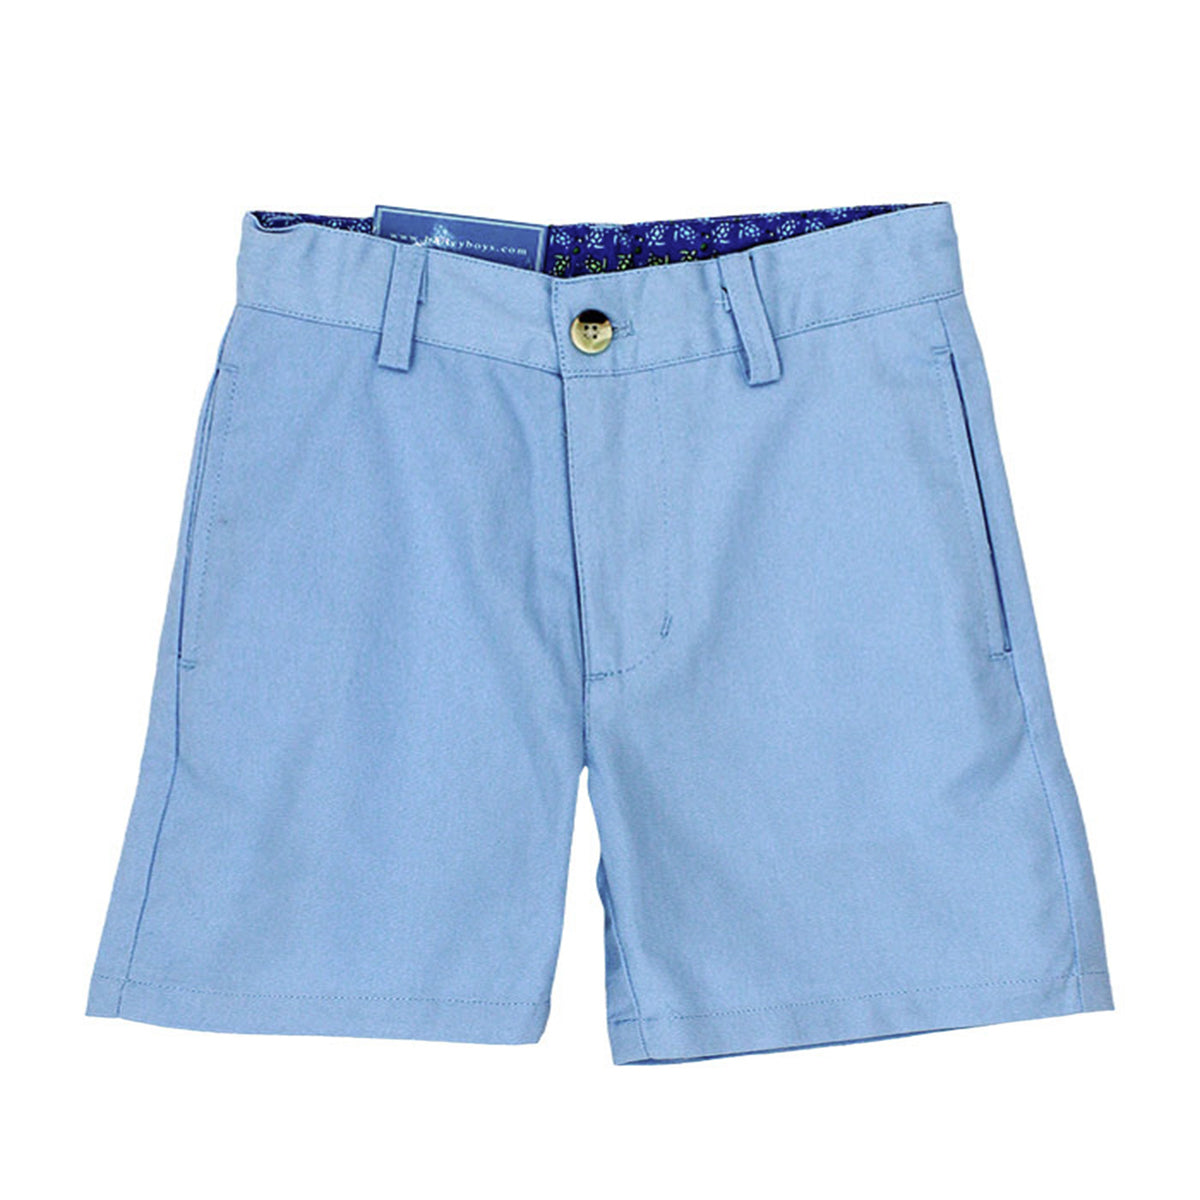 J. Bailey Harbor Blue Toddler Boy's Chino Shorts by Bailey Boys